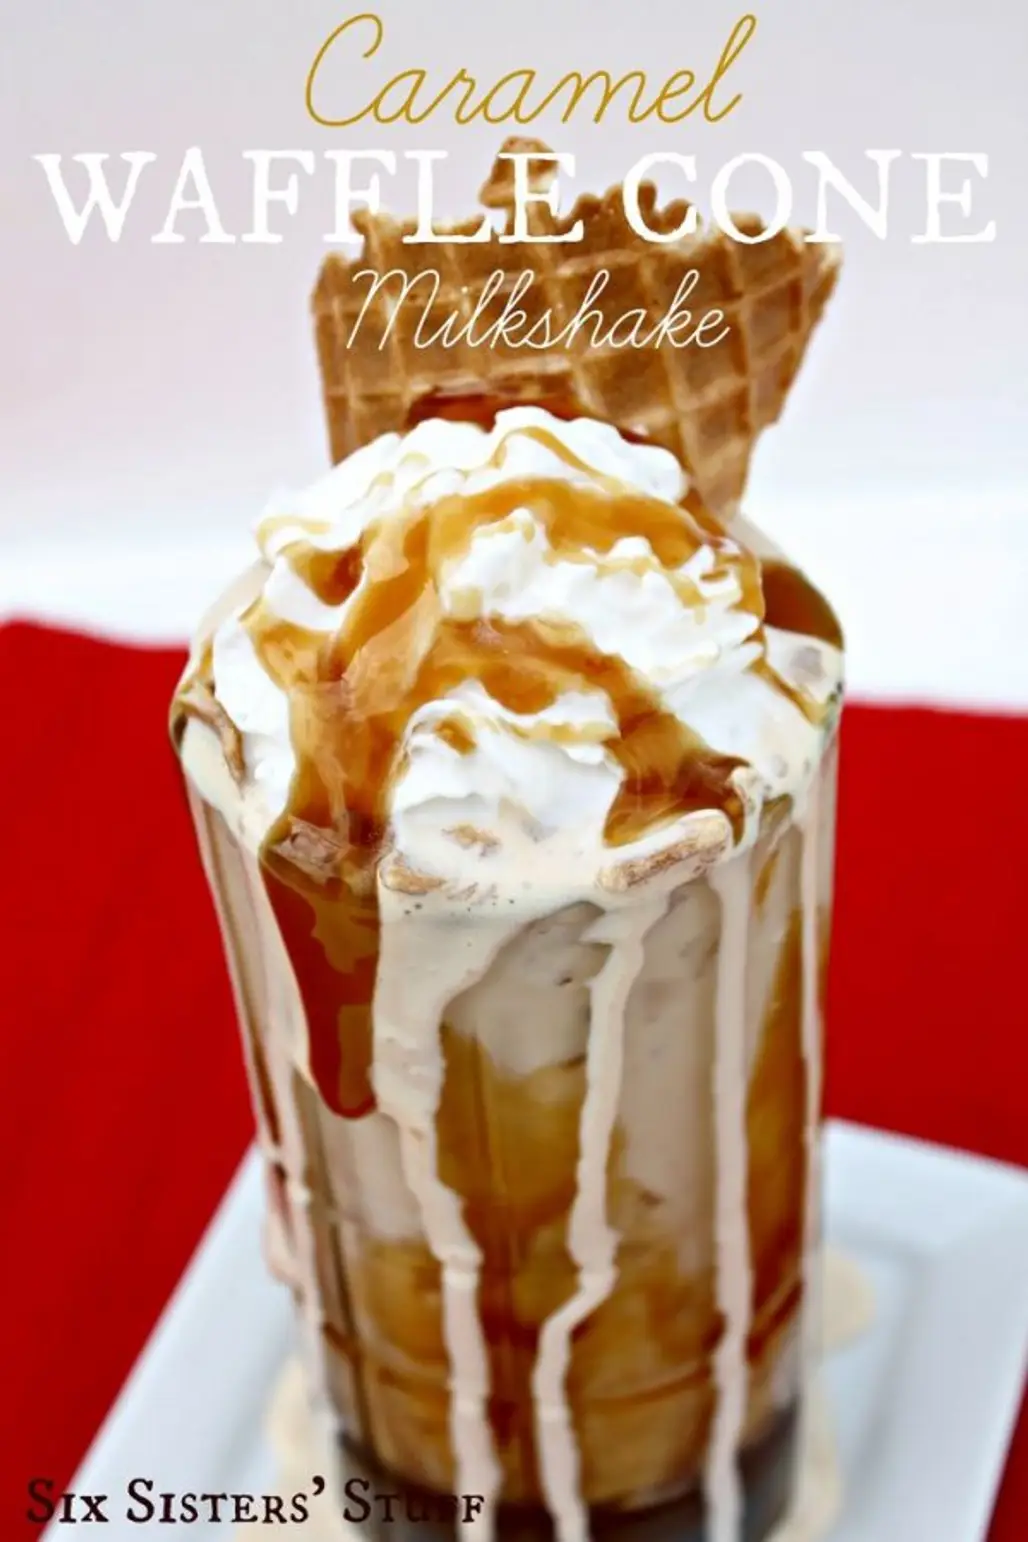 Caramel Waffle Cone Milkshake